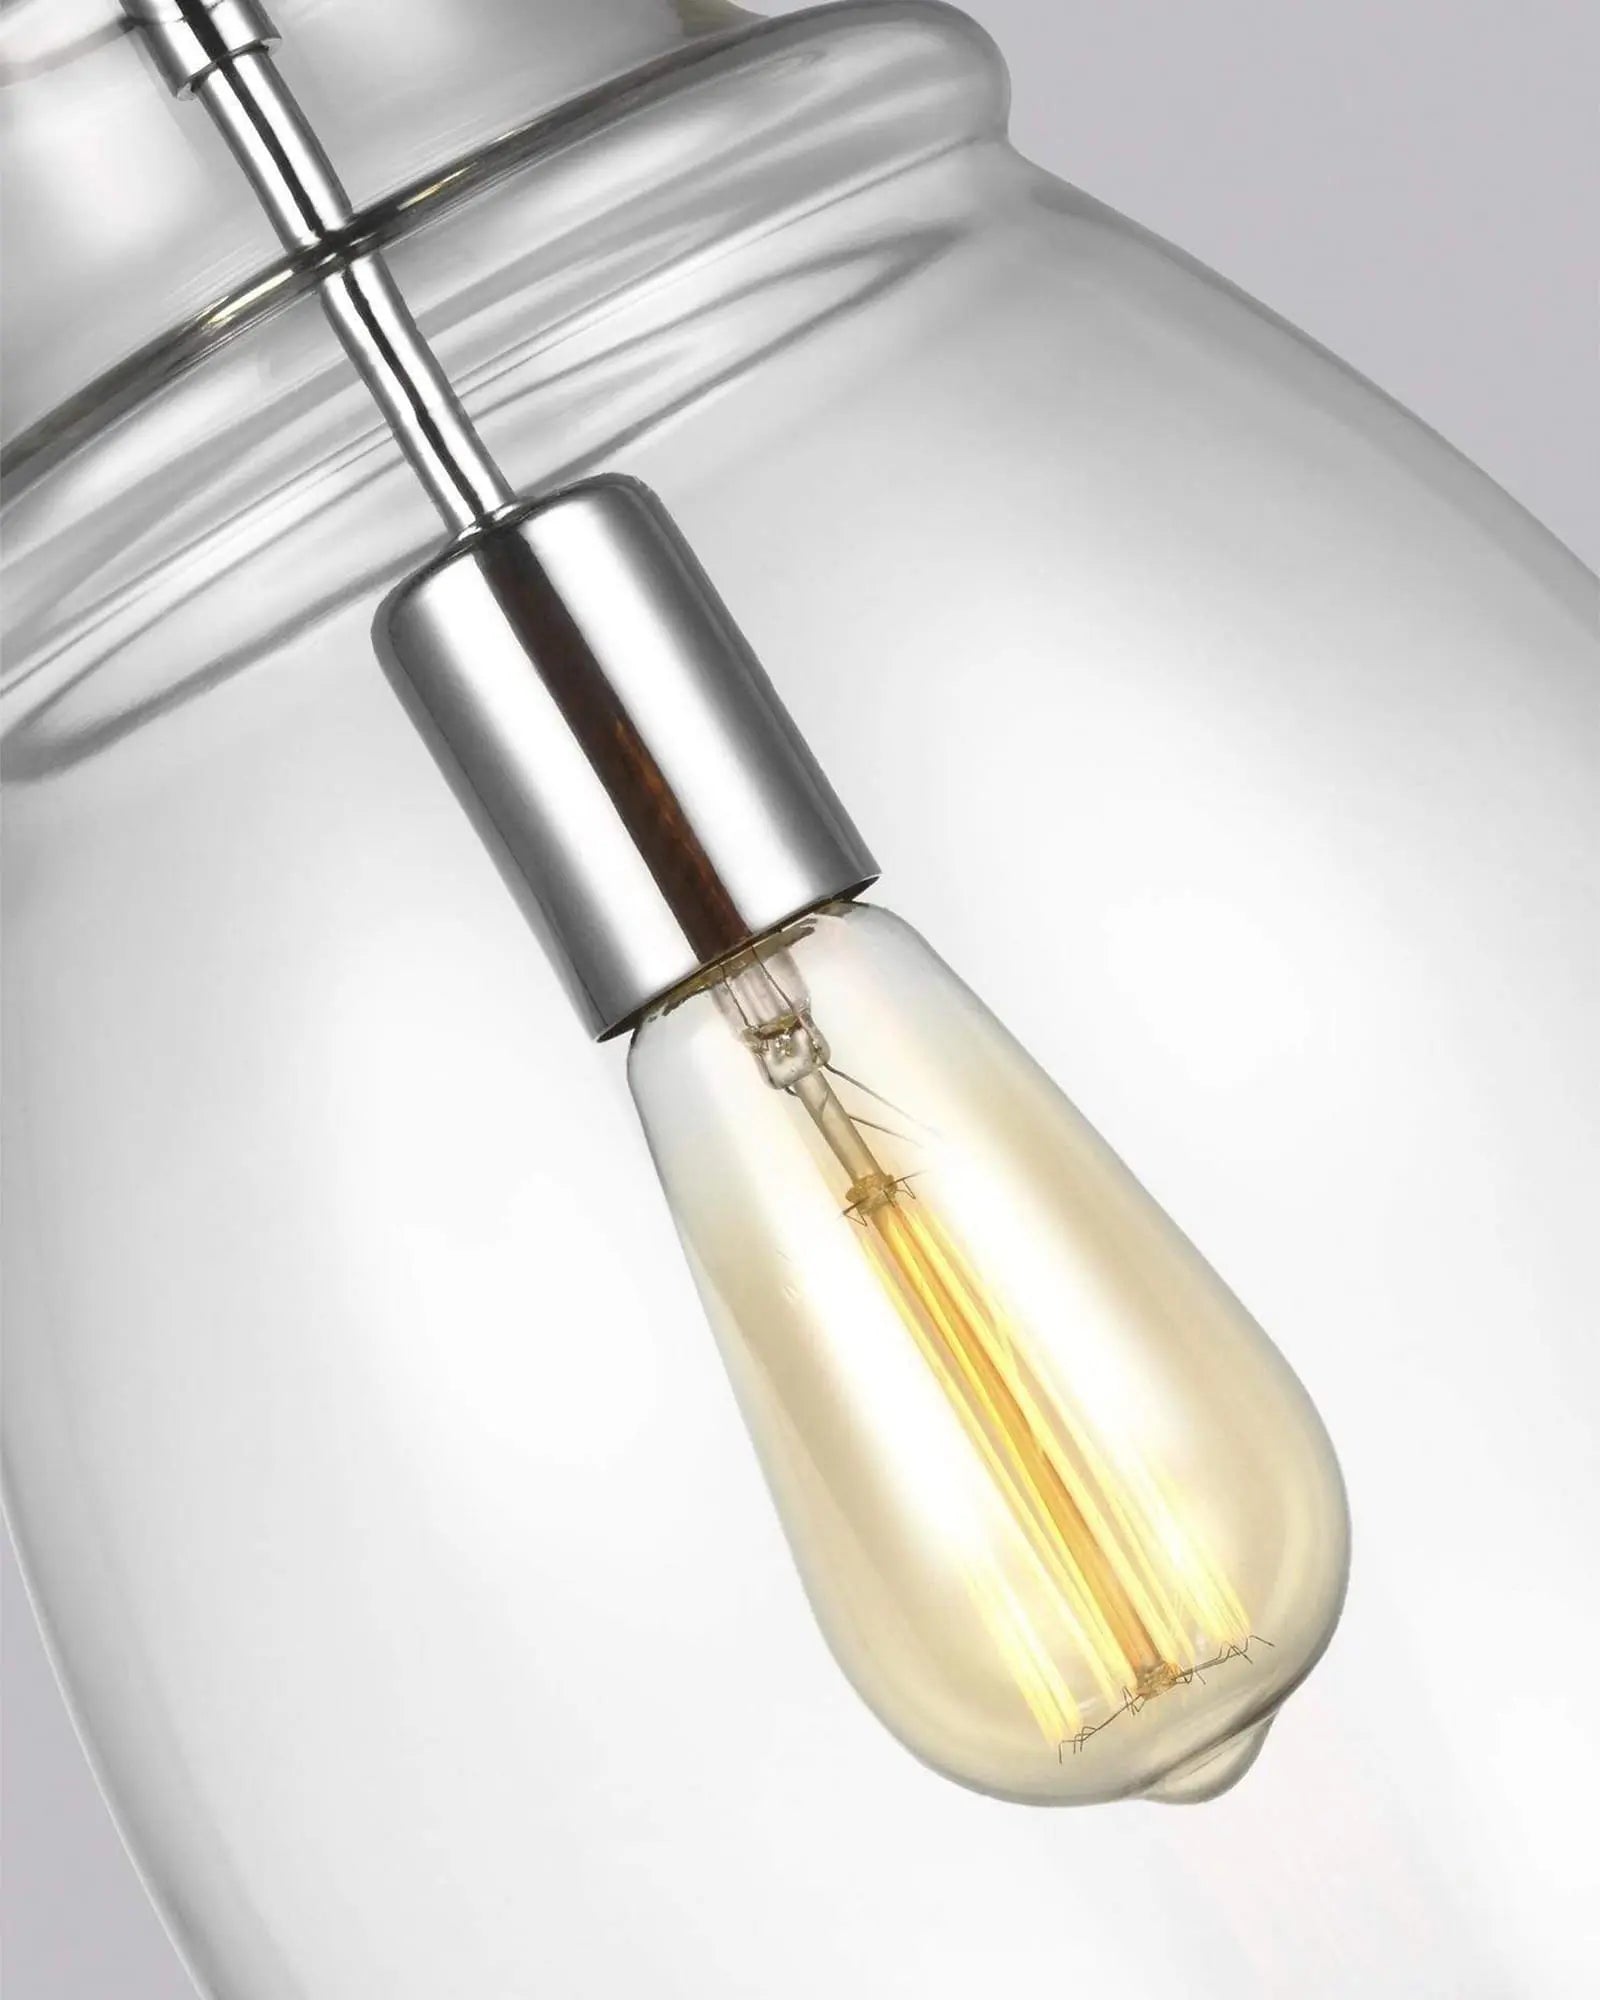 Marino blown glass pendant light detail